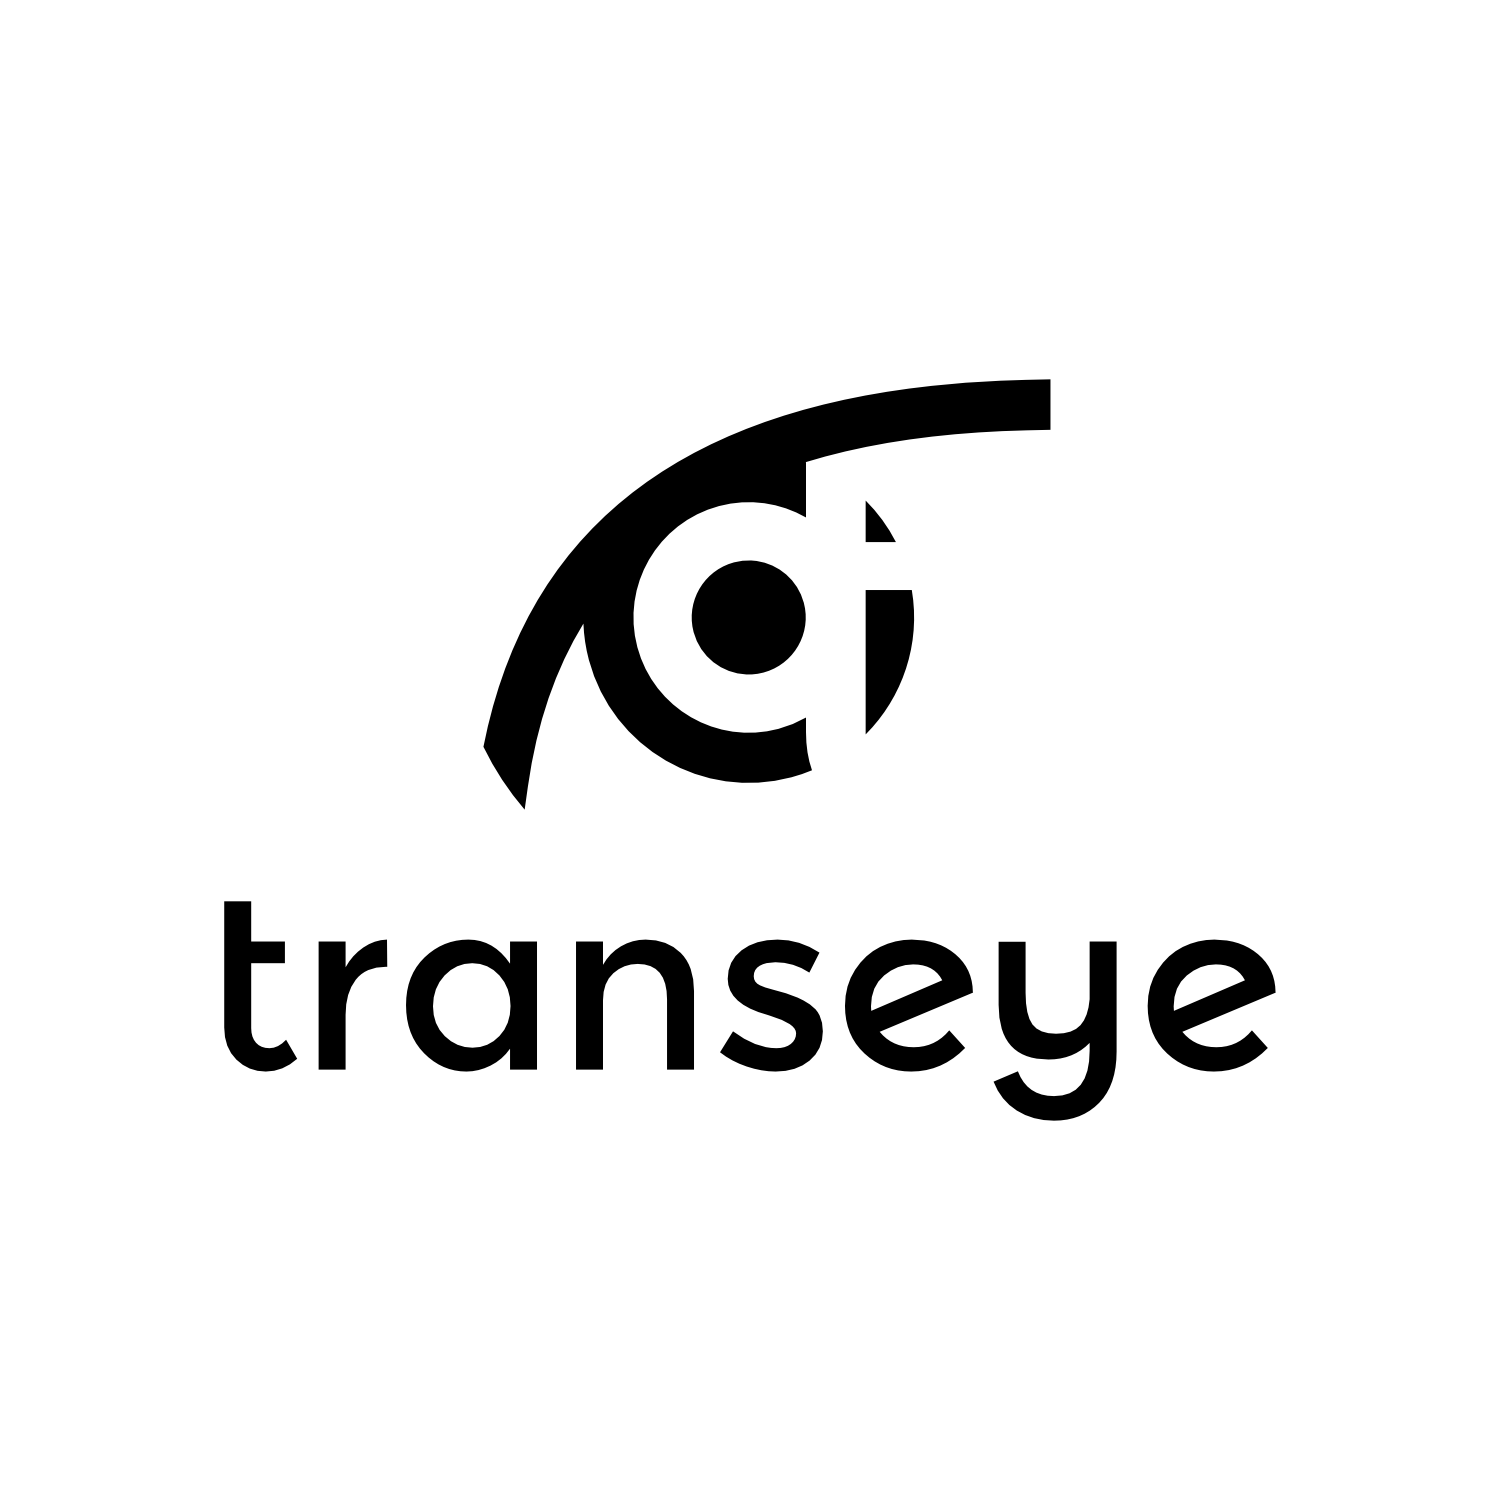 Transport company logo design